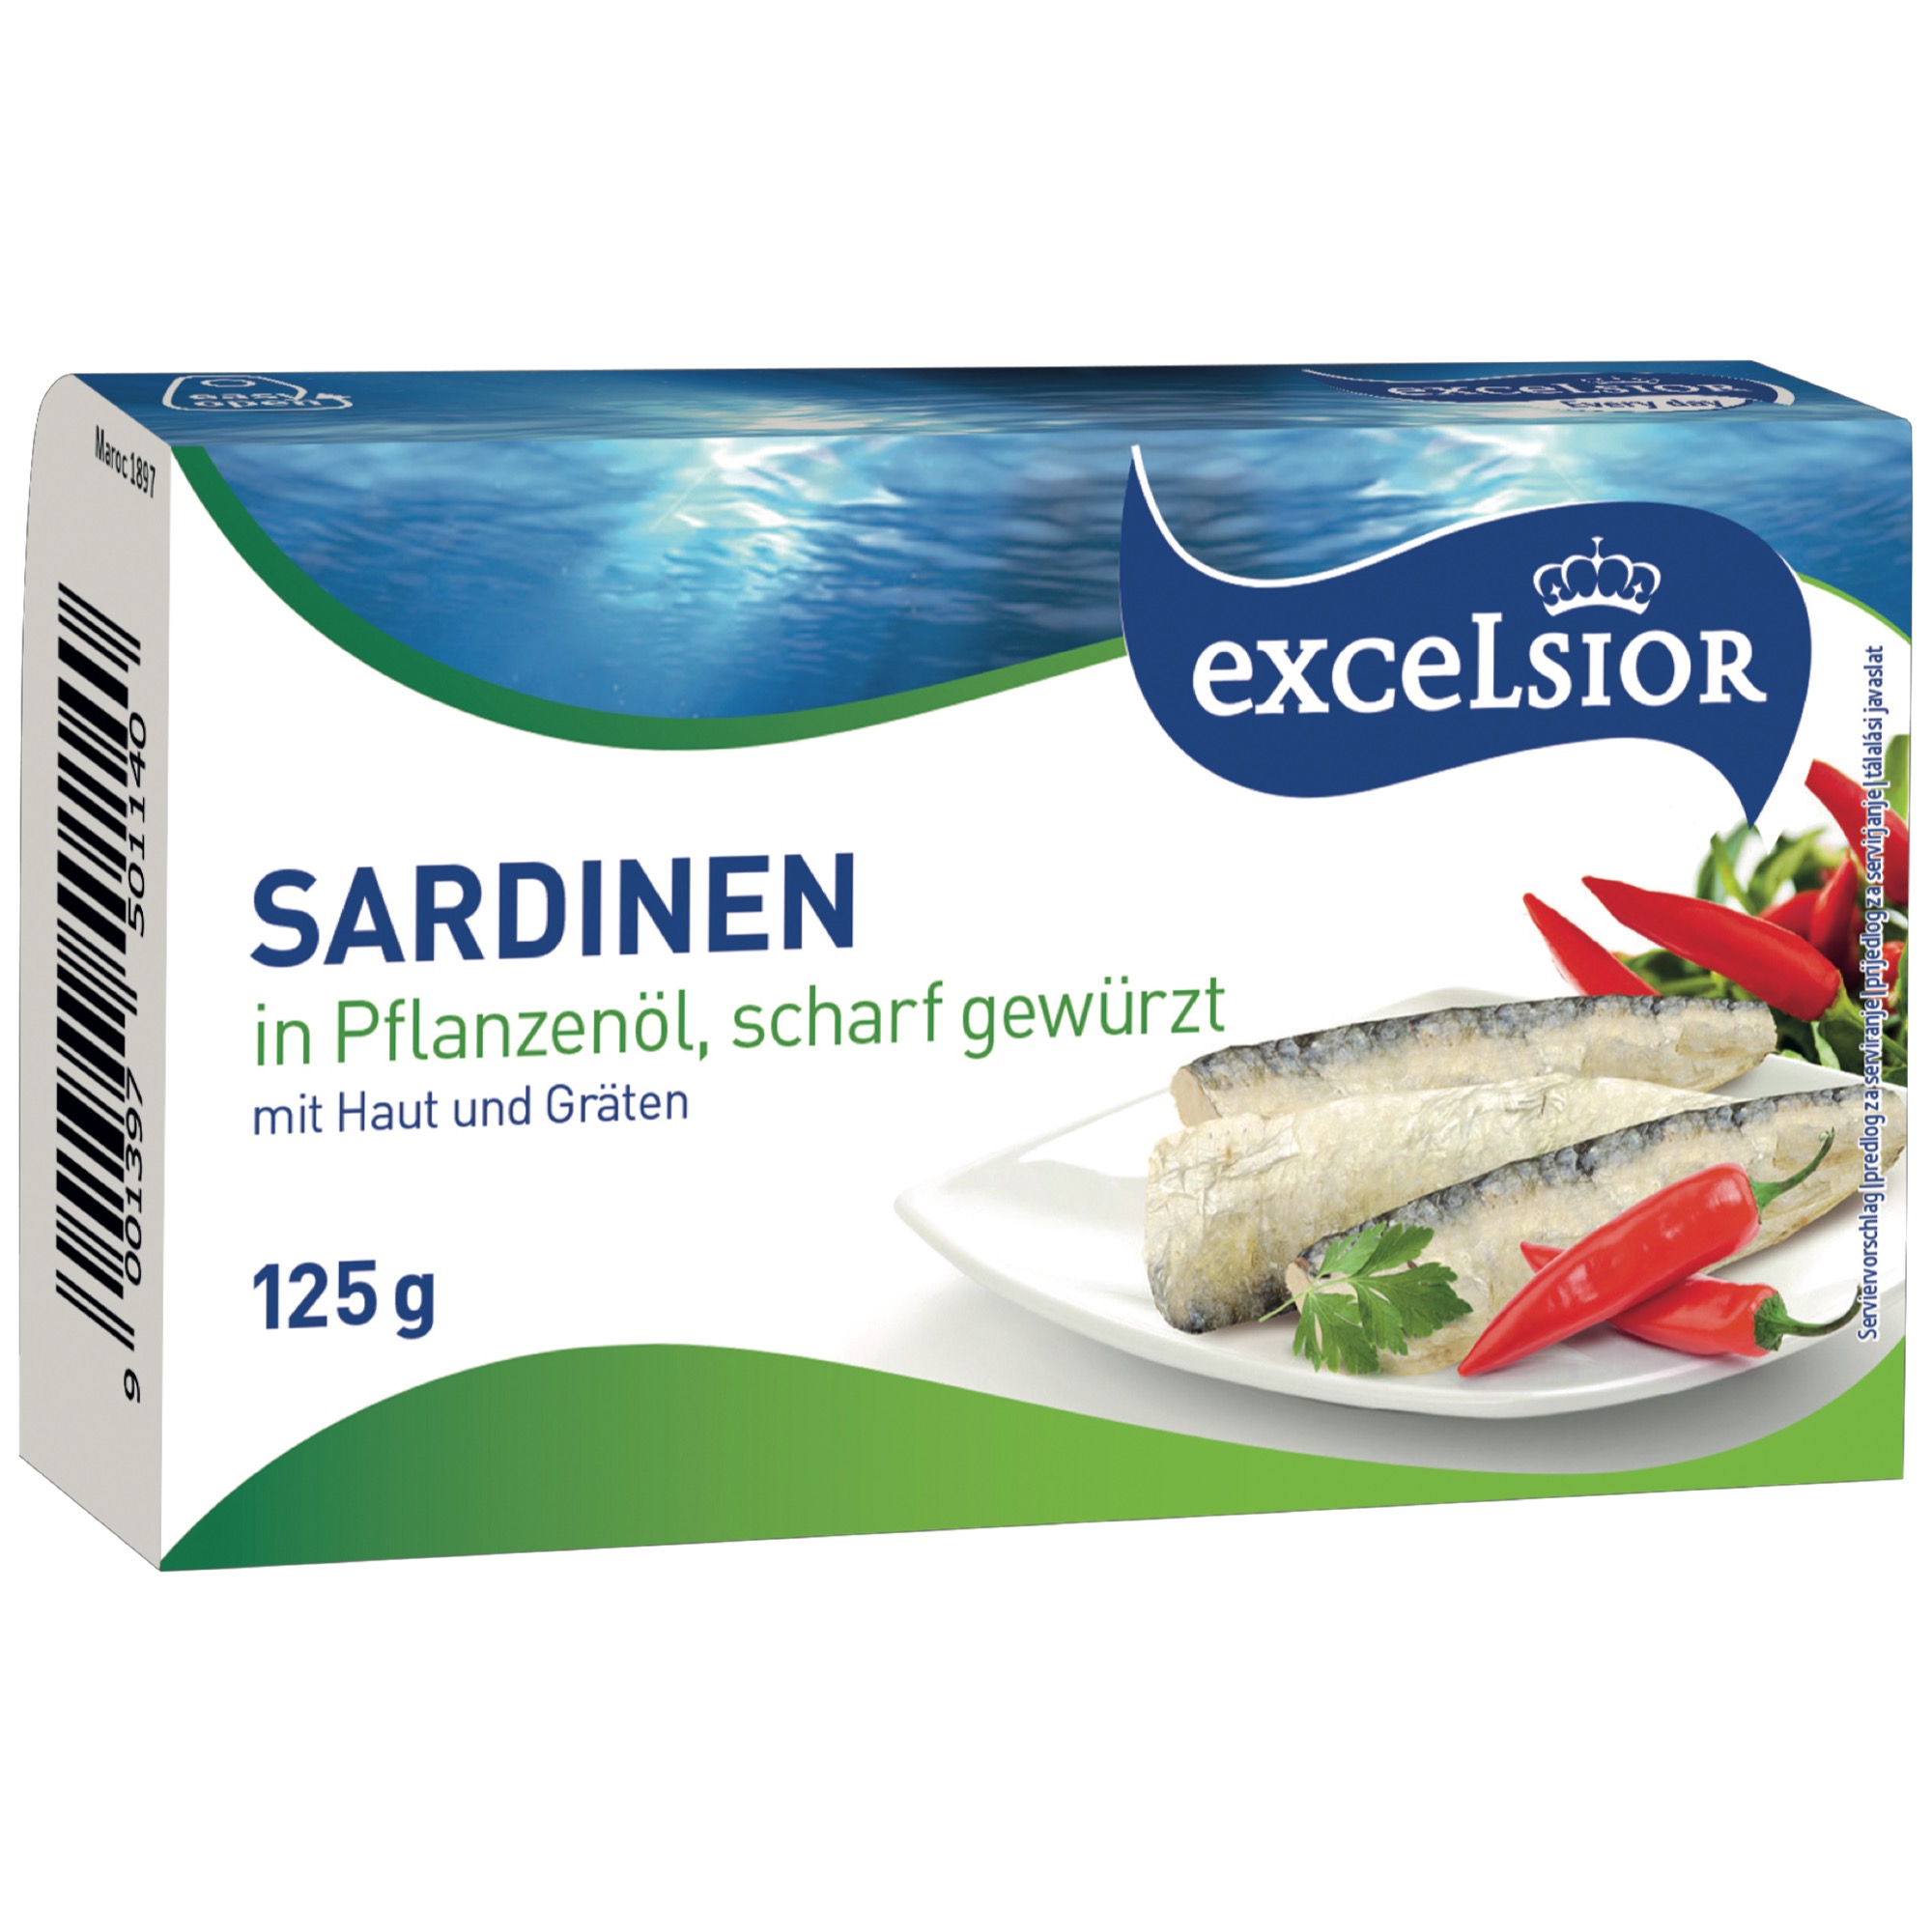 Excelsior sardinky pikant 125g